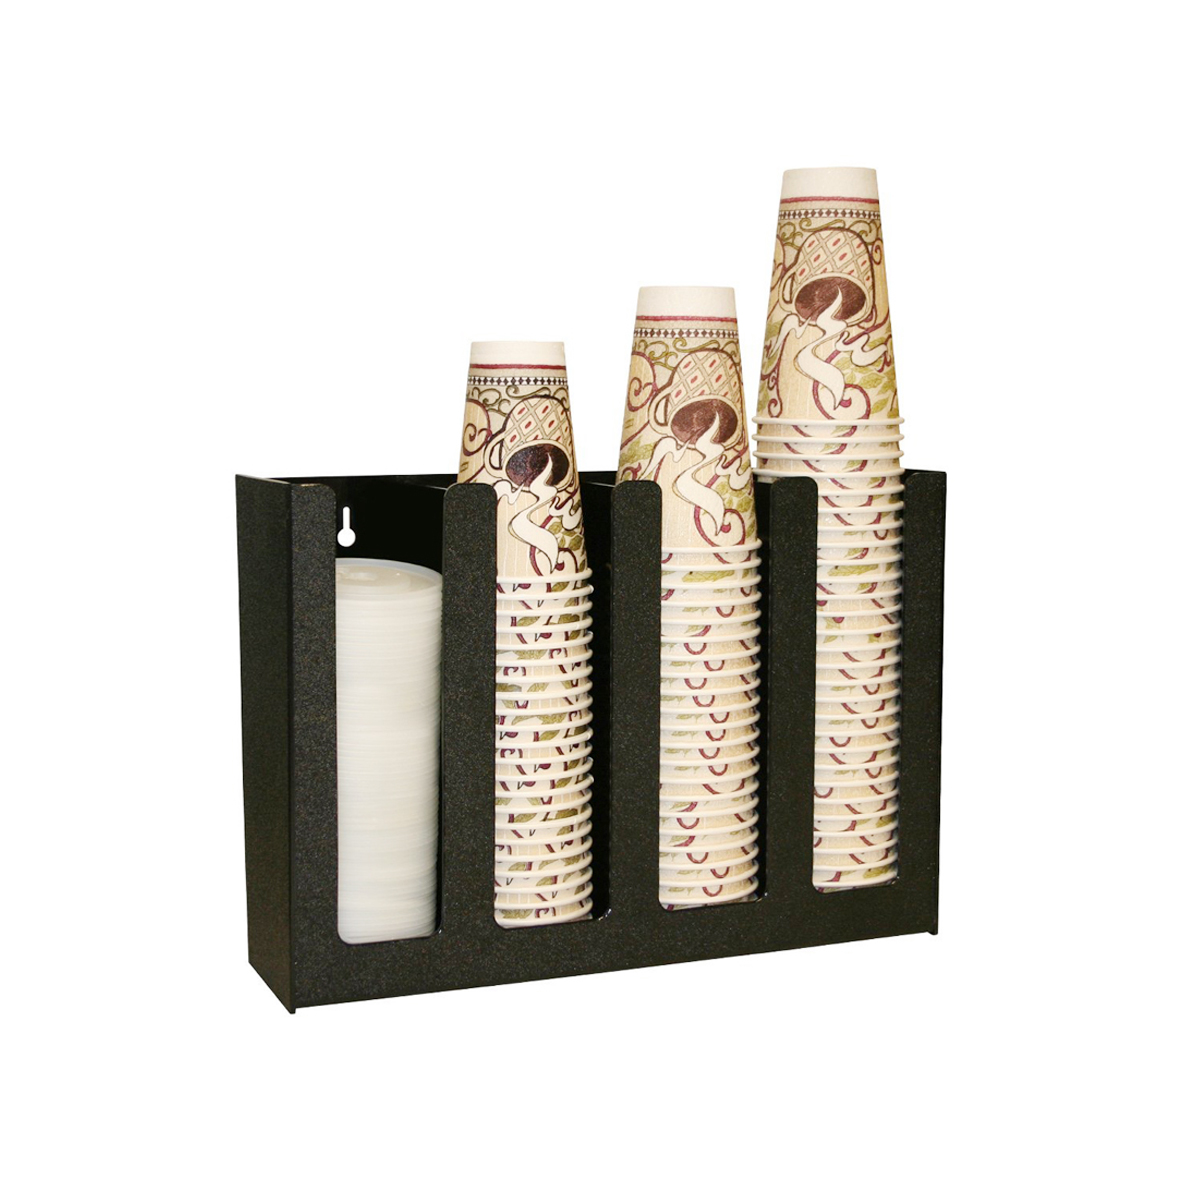 Acrylic Coffee Pod Dispenser/Kape accessories organizer